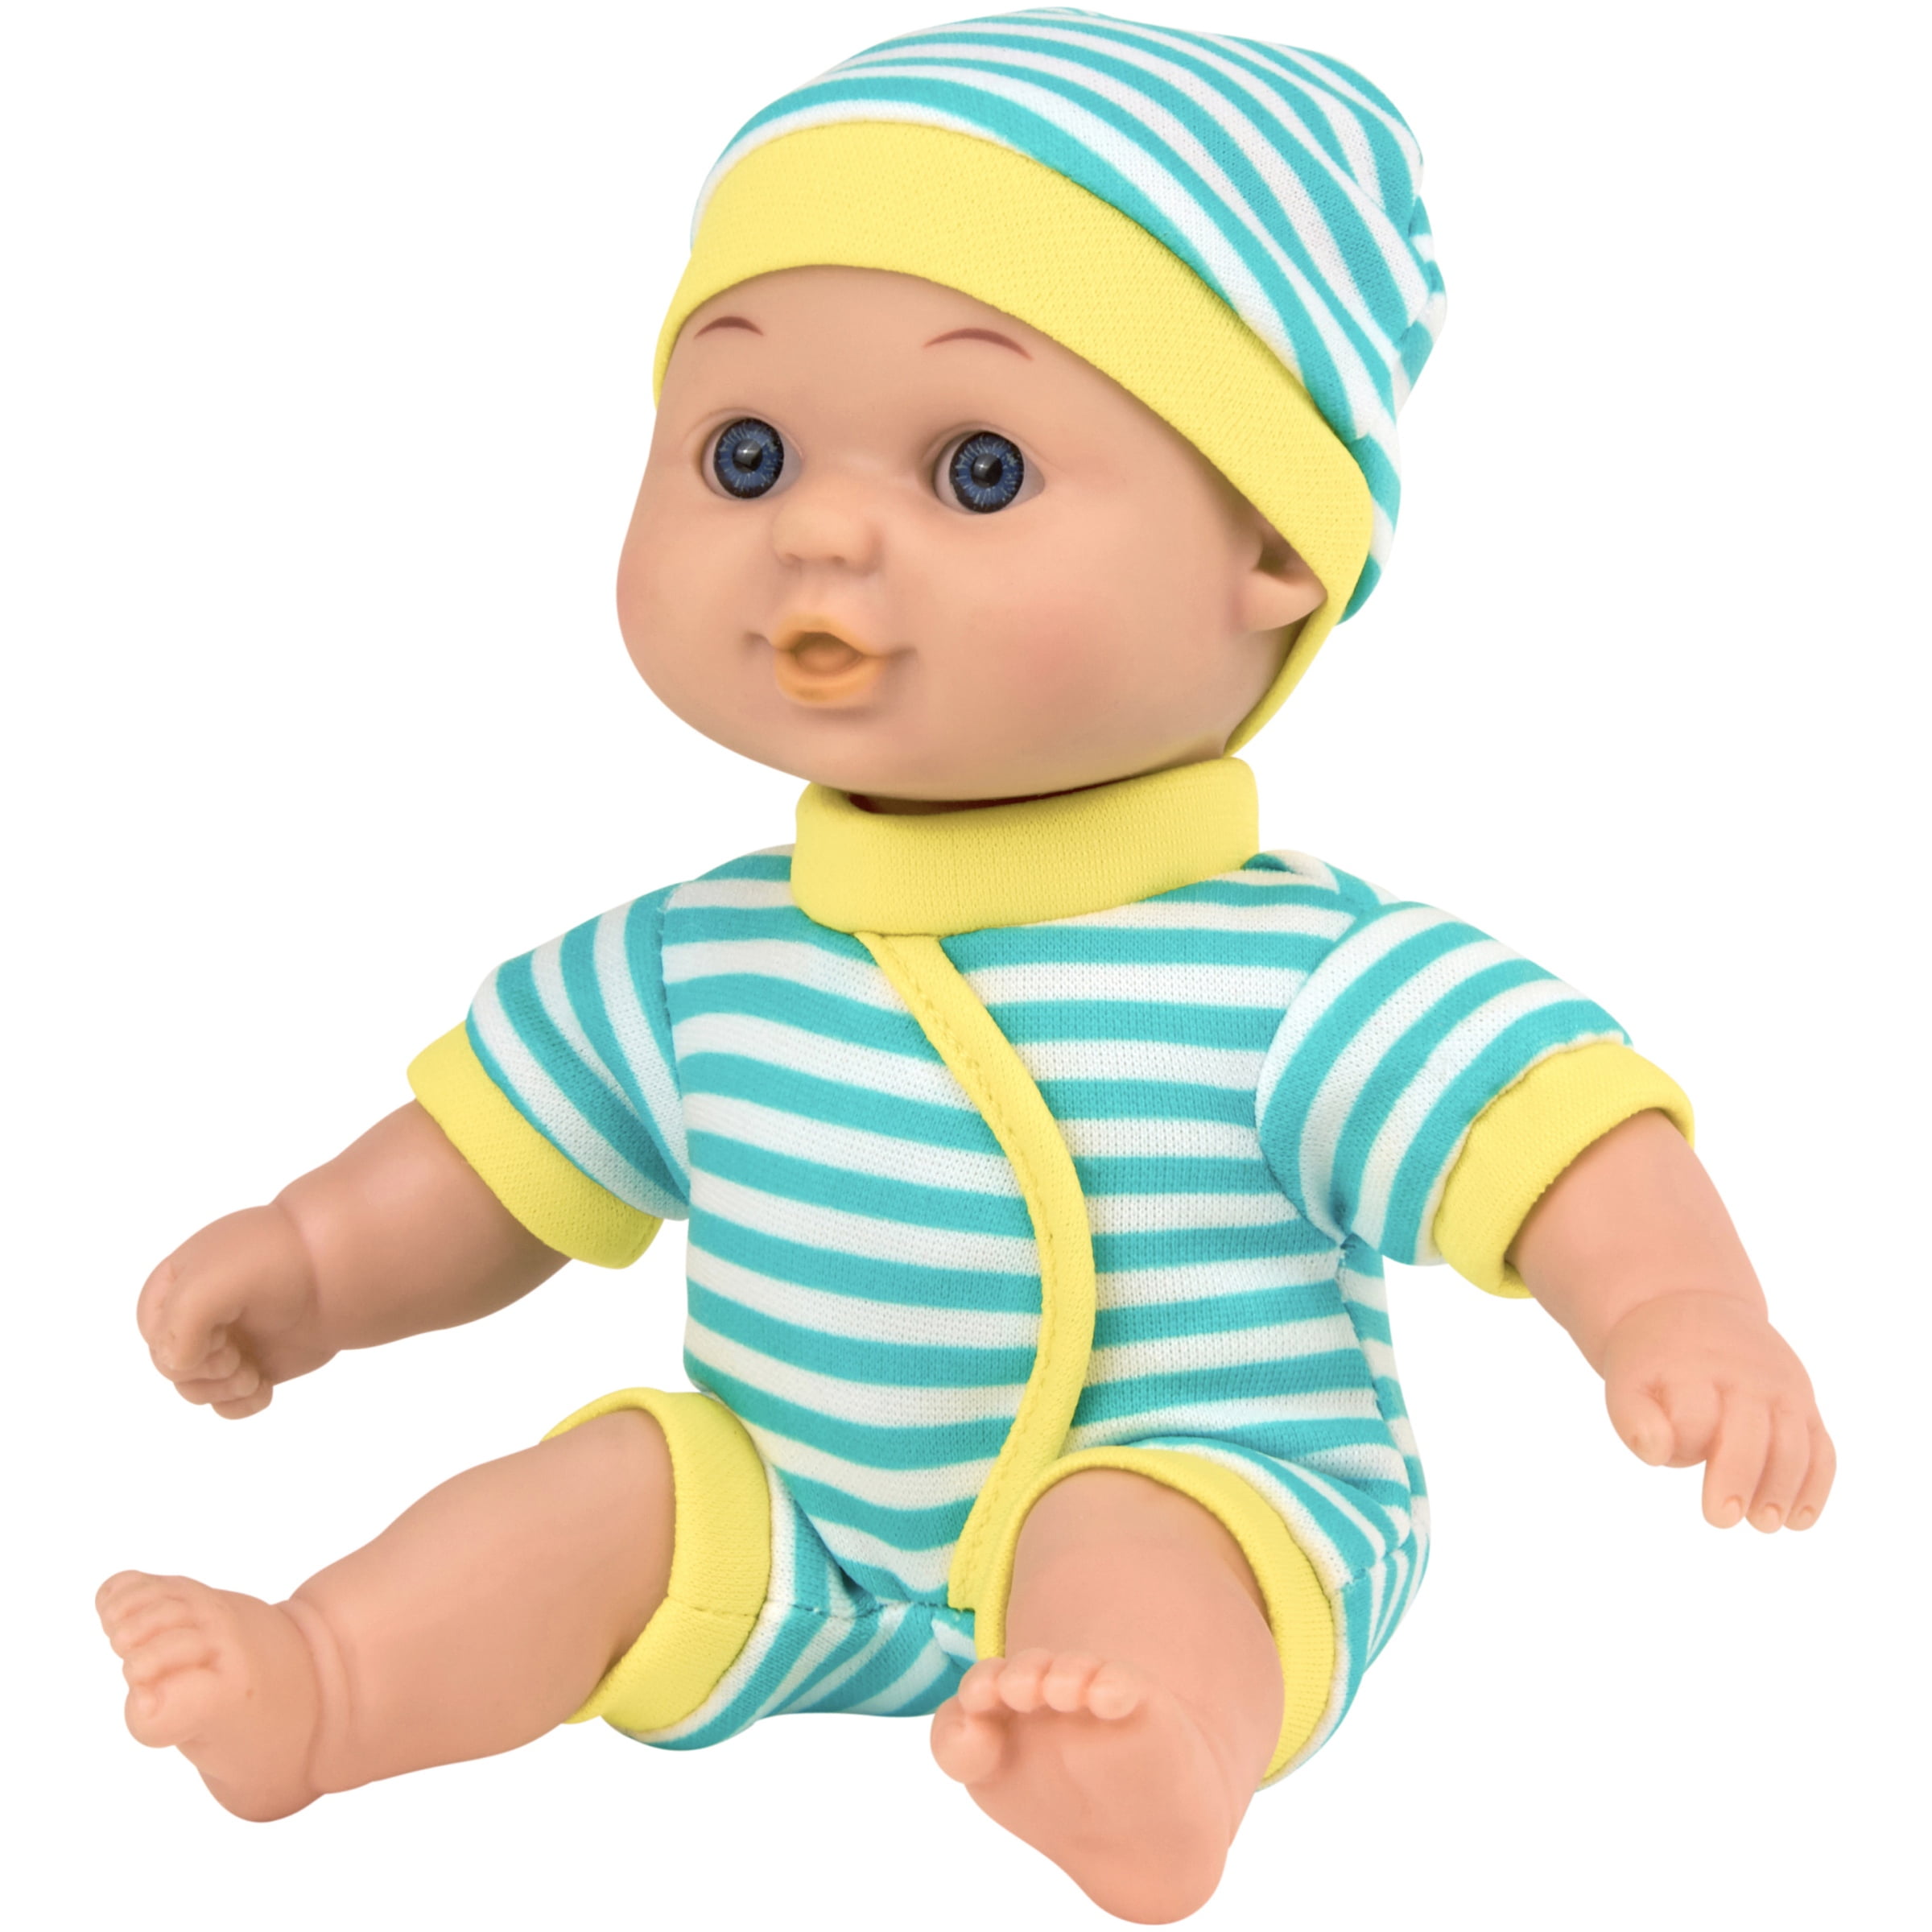 Baby dolls from walmart volvo 31320393